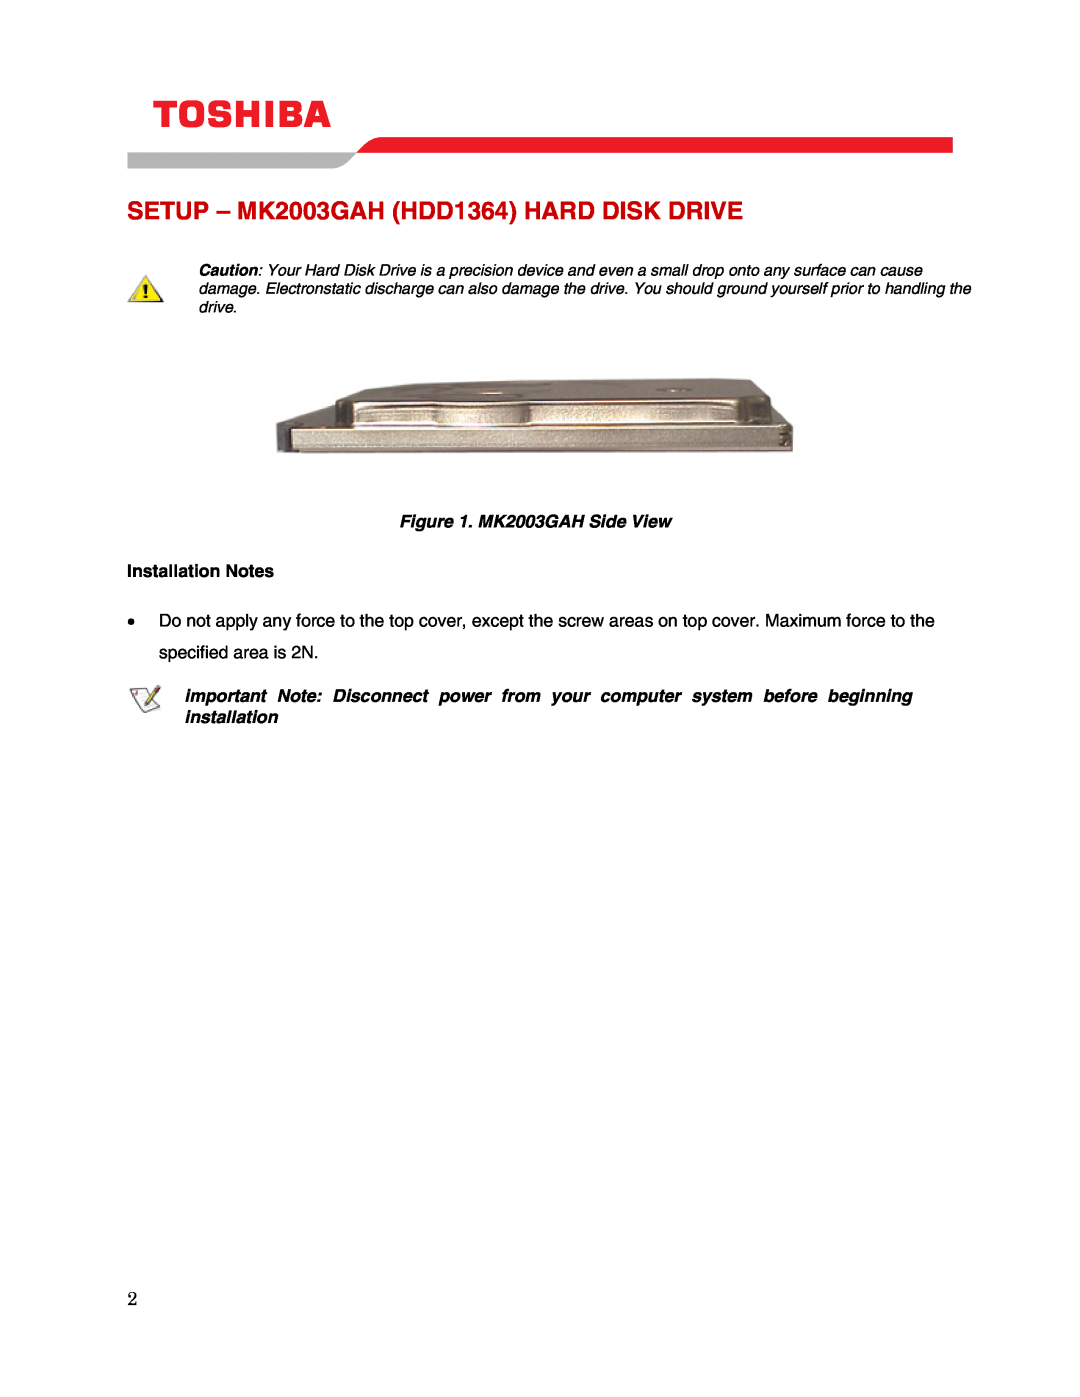 Toshiba user manual SETUP - MK2003GAH HDD1364 HARD DISK DRIVE, MK2003GAH Side View, Installation Notes 